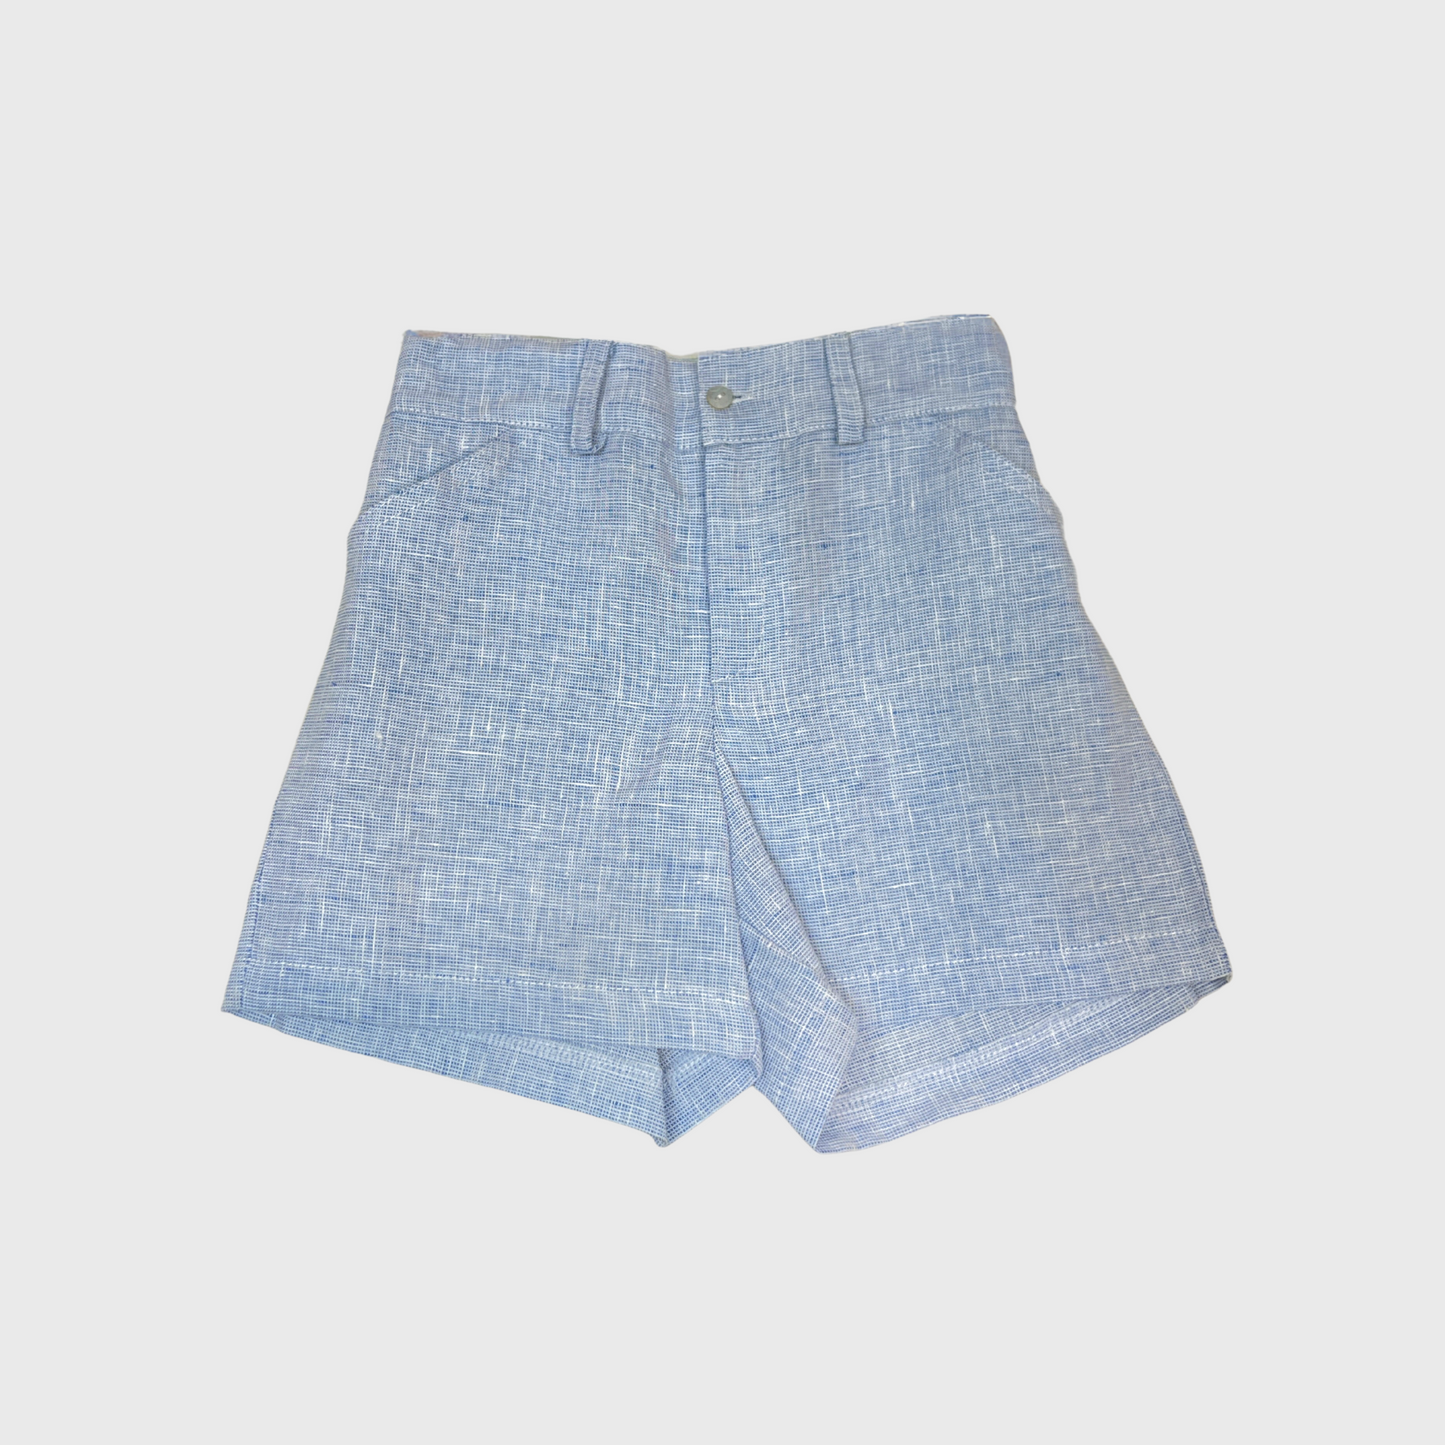 2pc Ivory/Blue Linen Tee w Shorts